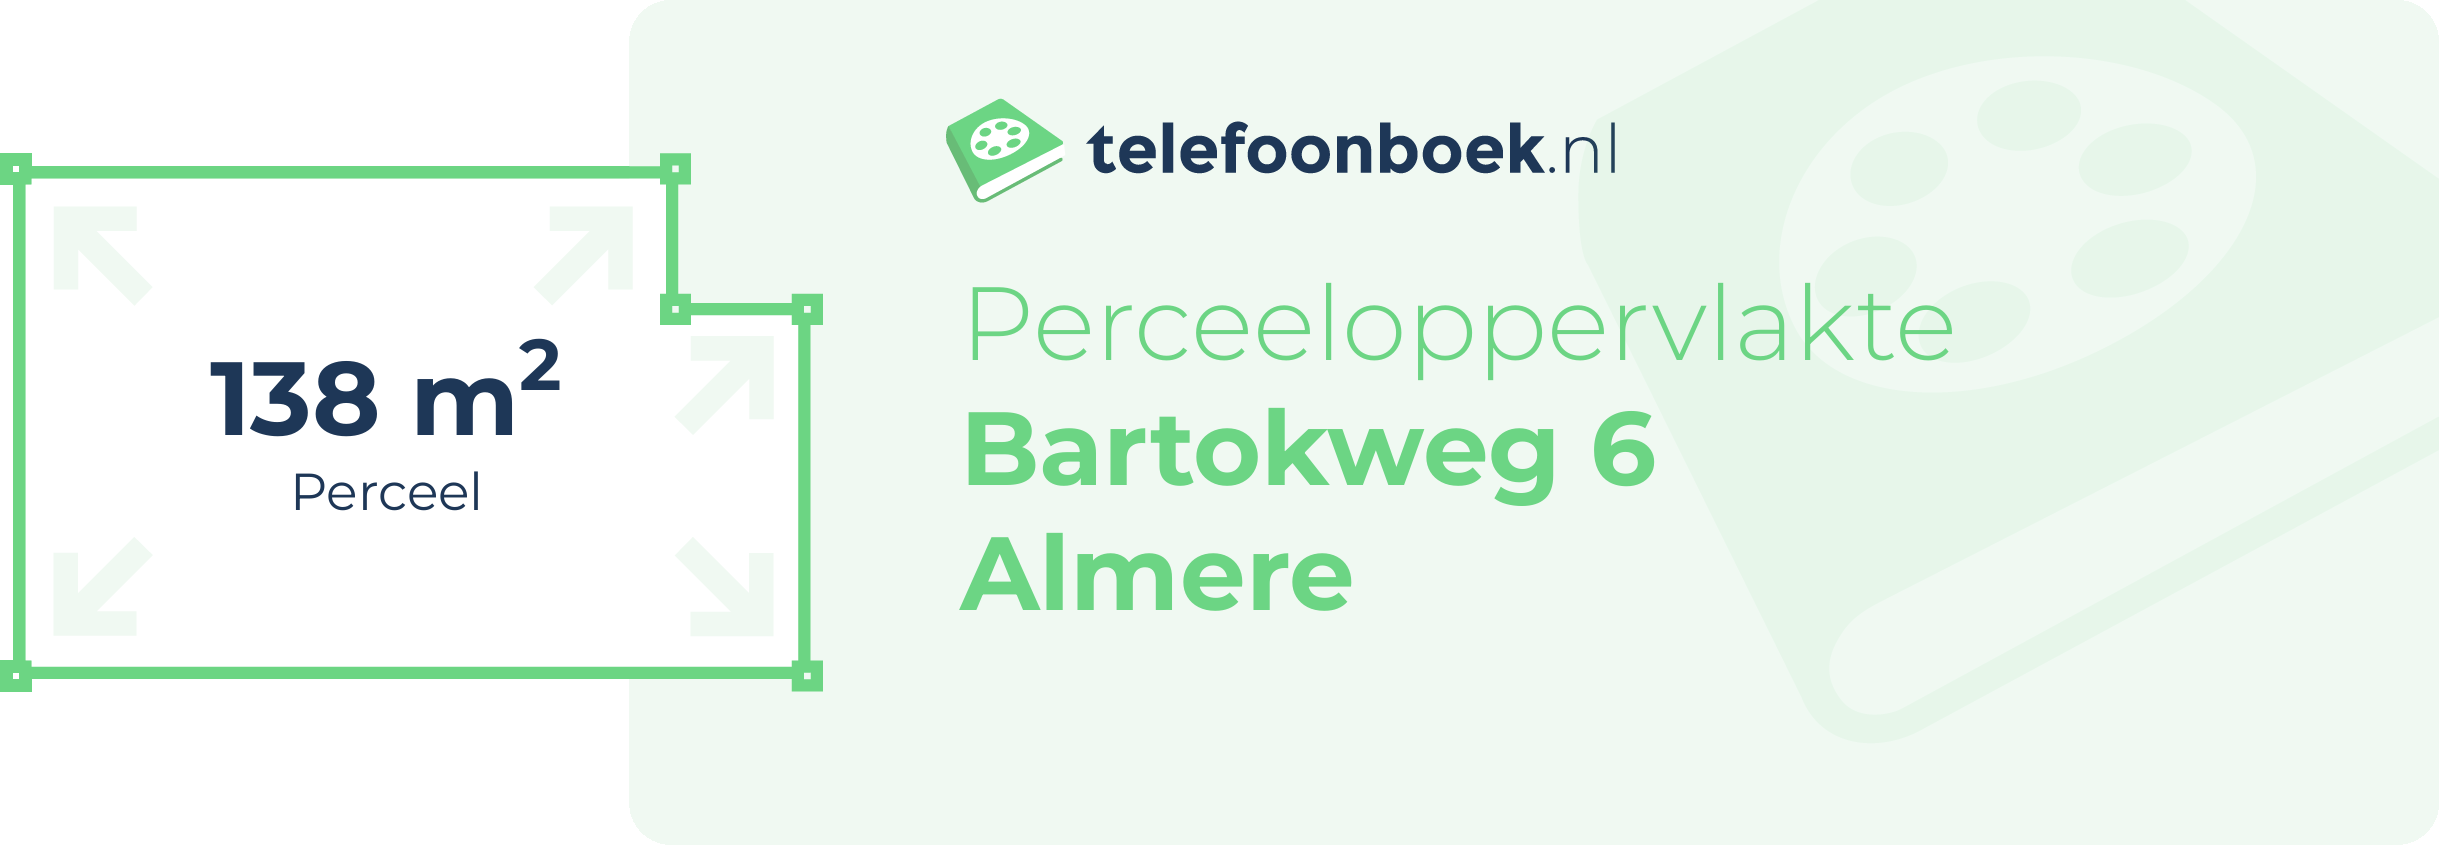 Perceeloppervlakte Bartokweg 6 Almere